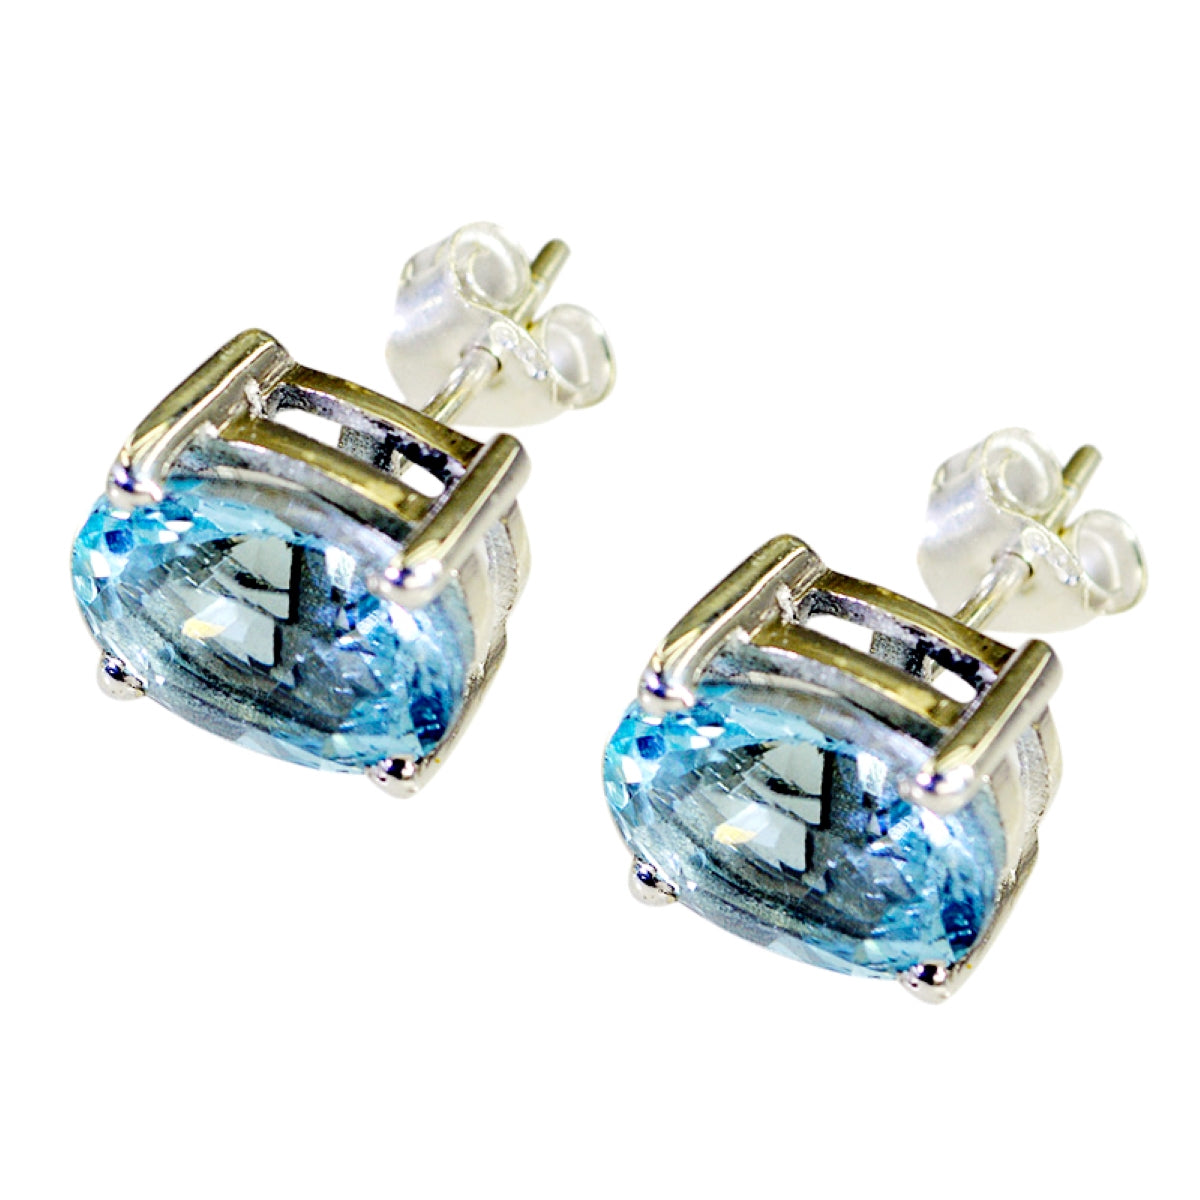 Riyo Good Gemstones oval Faceted Blue Topaz Silver Earring gift for easter Sunday